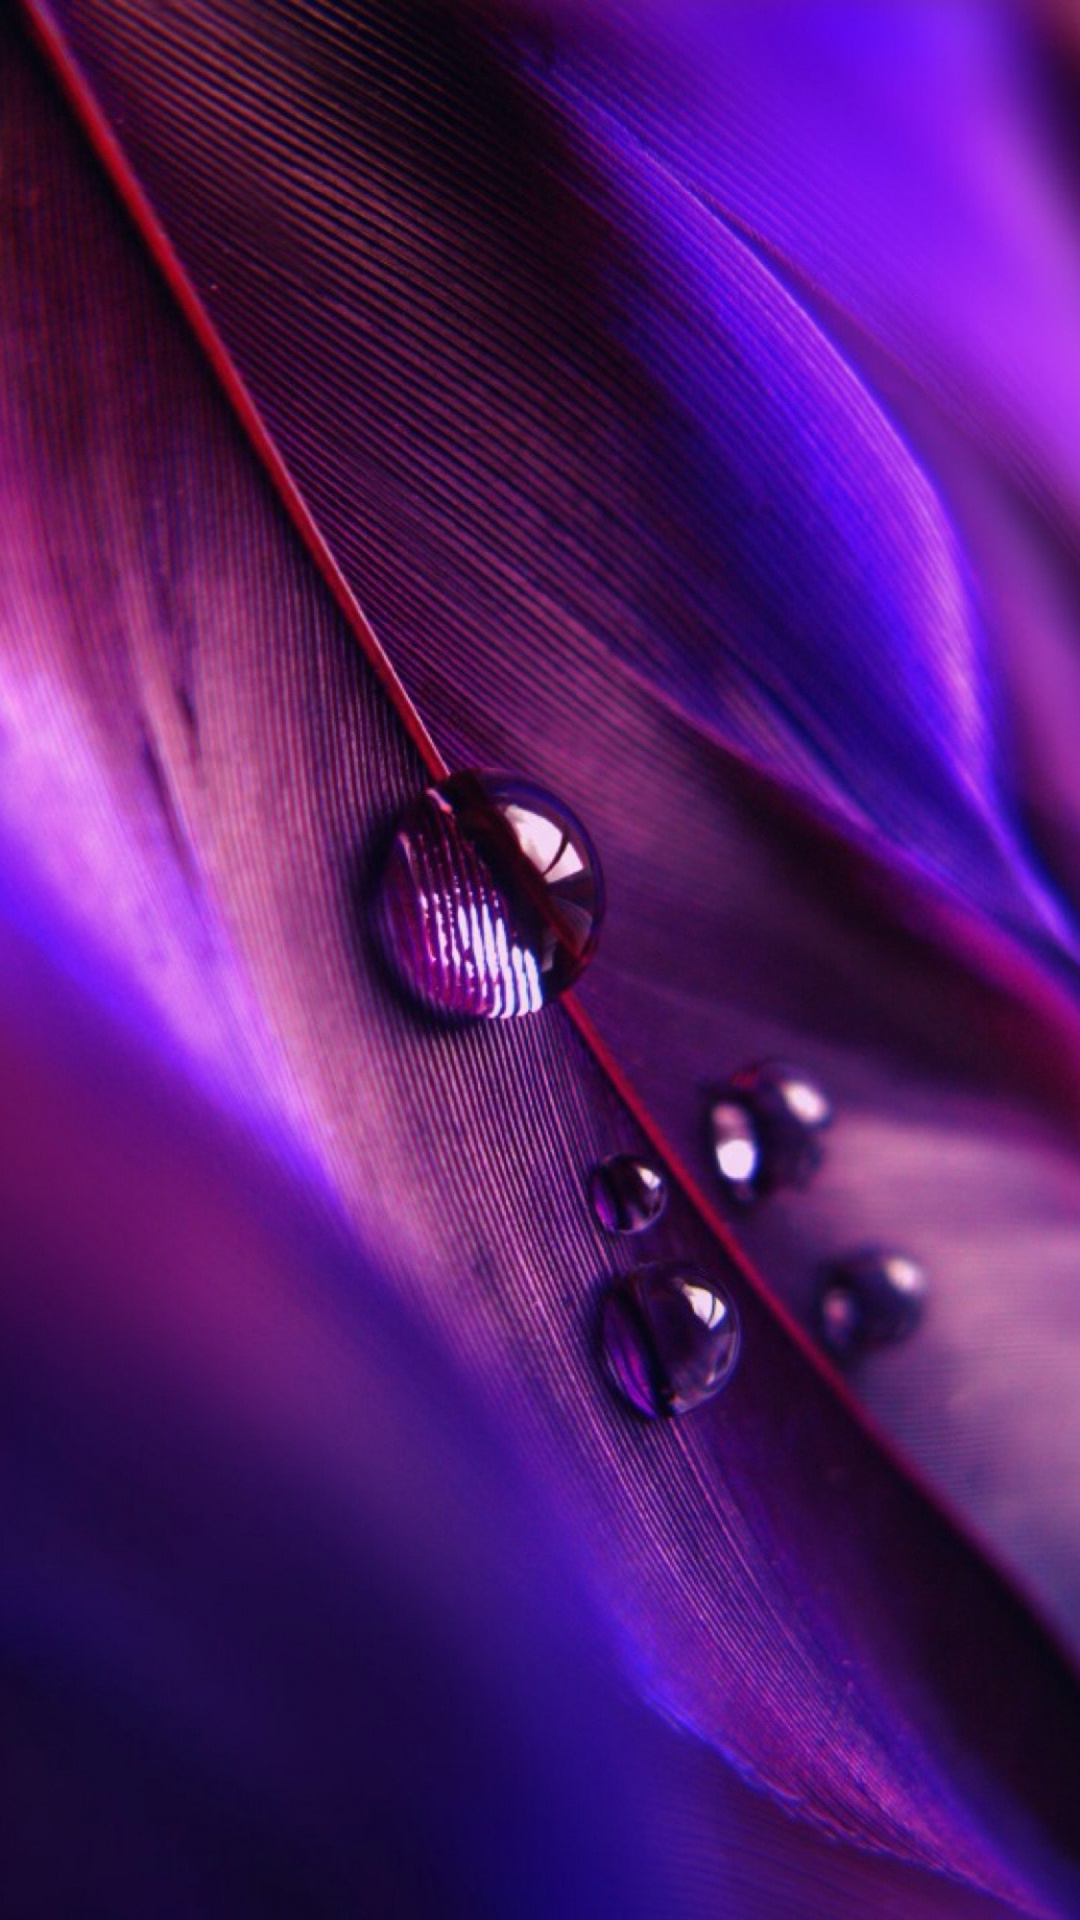 Water Droplets on Purple Leaf. Wallpaper in 1080x1920 Resolution